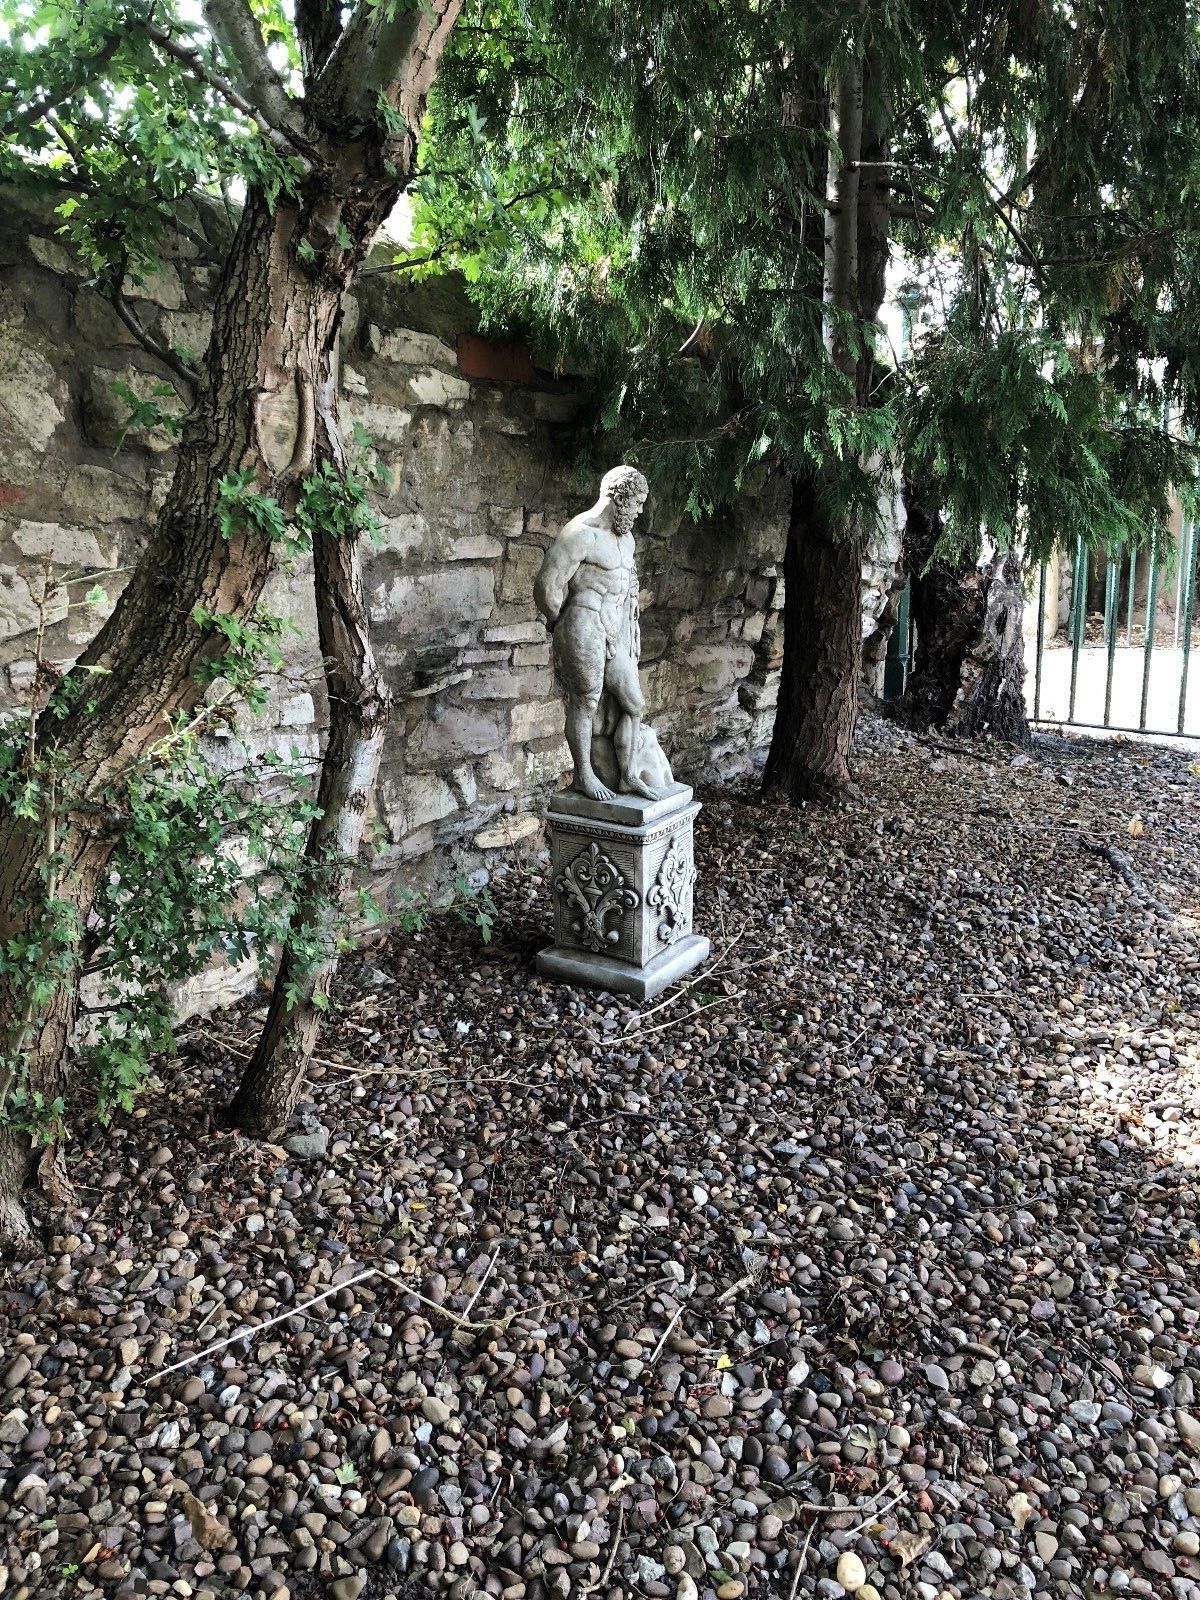 Stunning Stone Naked Hercules Sculpture Garden Statue